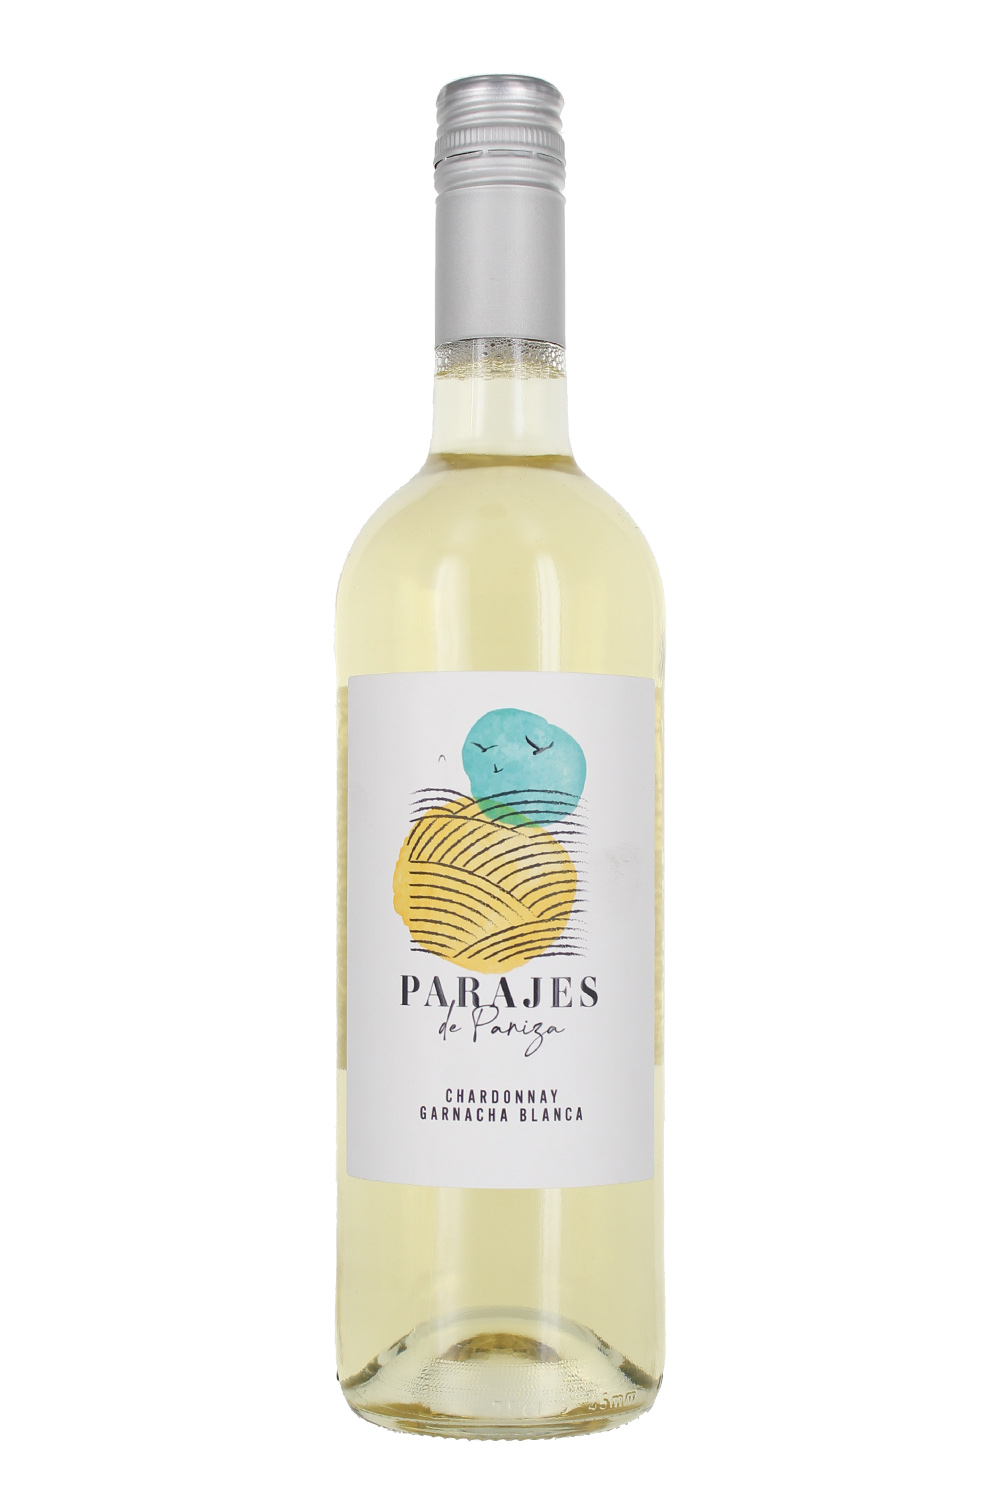 2021 Chardonnay Garnacha Blanca, Parajes de Paniza - Jeroboams